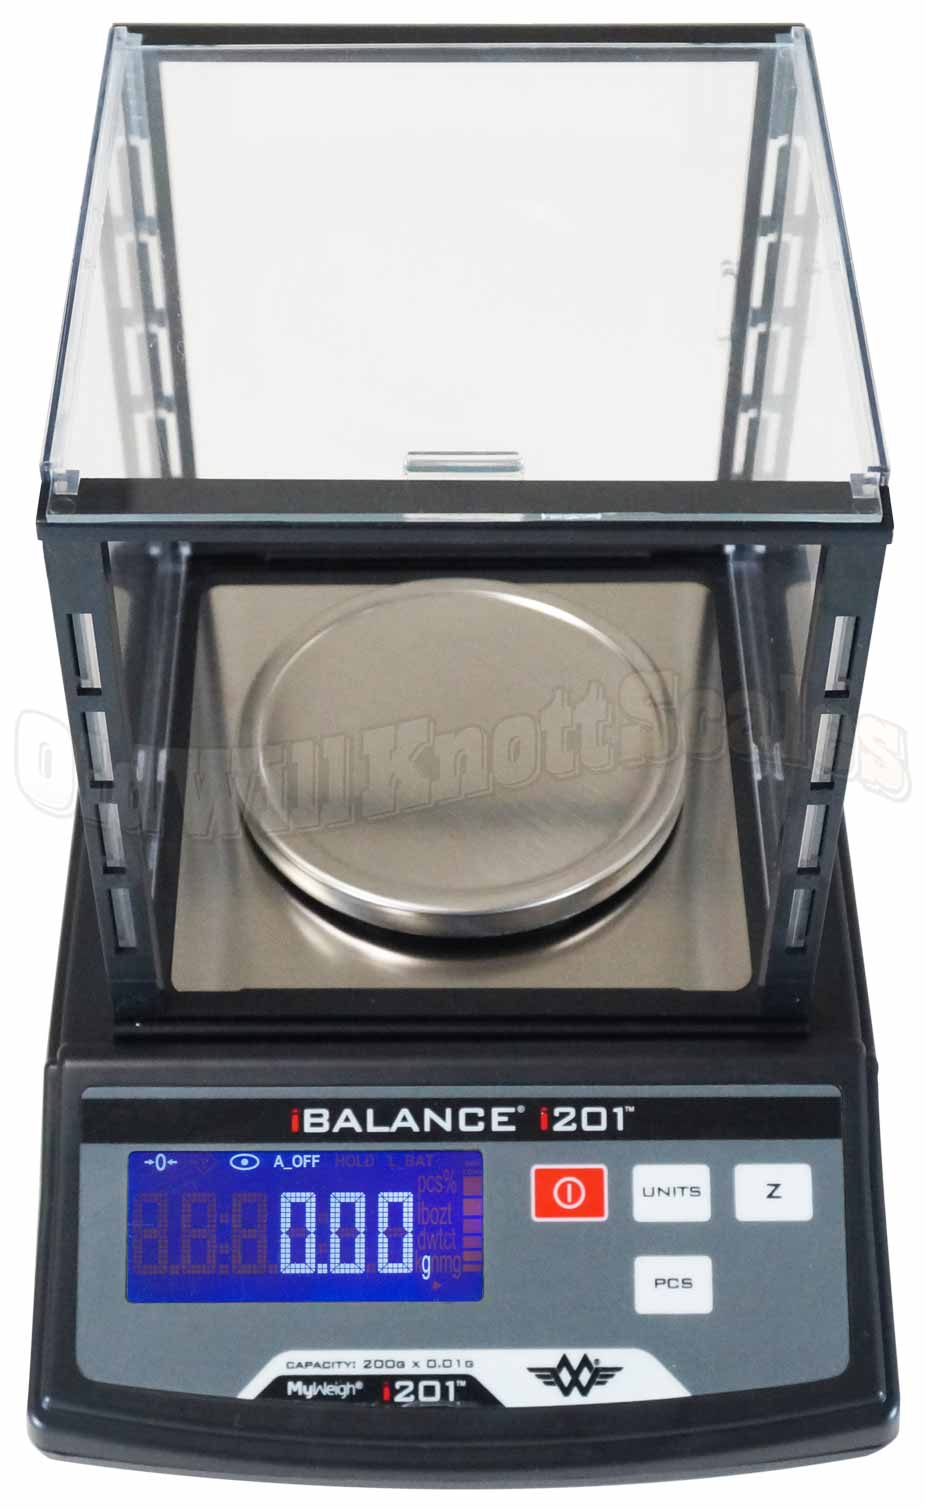 My Weigh iBalance i201 Digital Centigram Balance